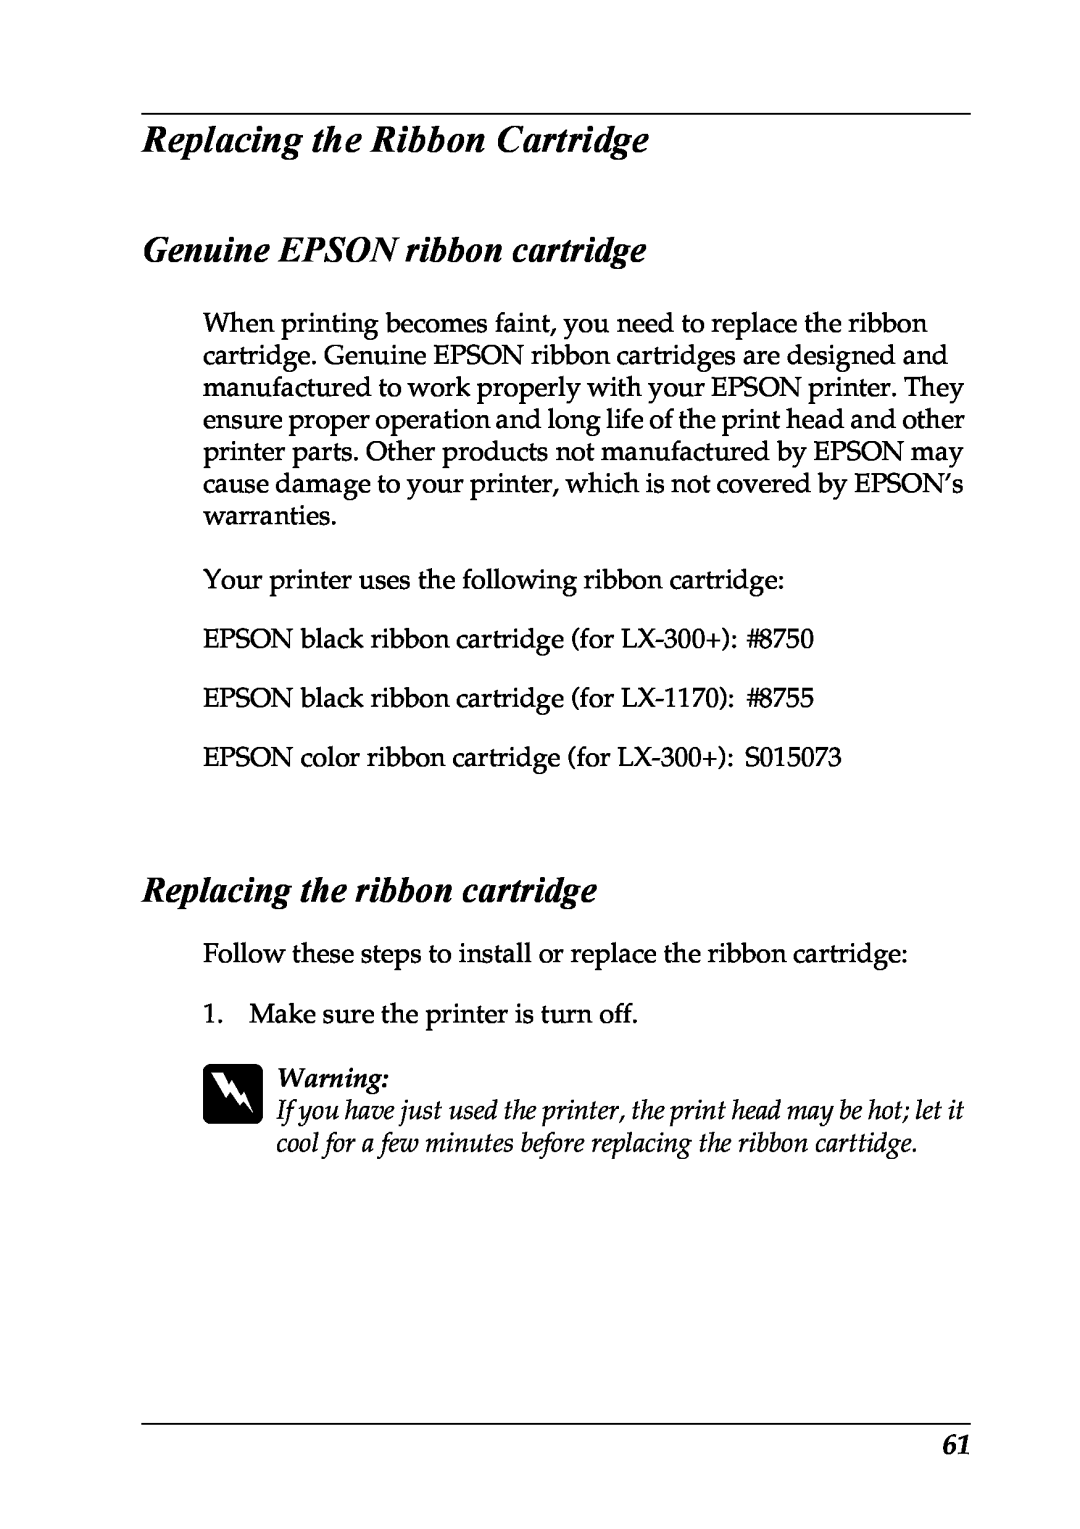 Epson LX-1170 Replacing the Ribbon Cartridge, Genuine EPSON ribbon cartridge, Replacing the ribbon cartridge, w Warning 